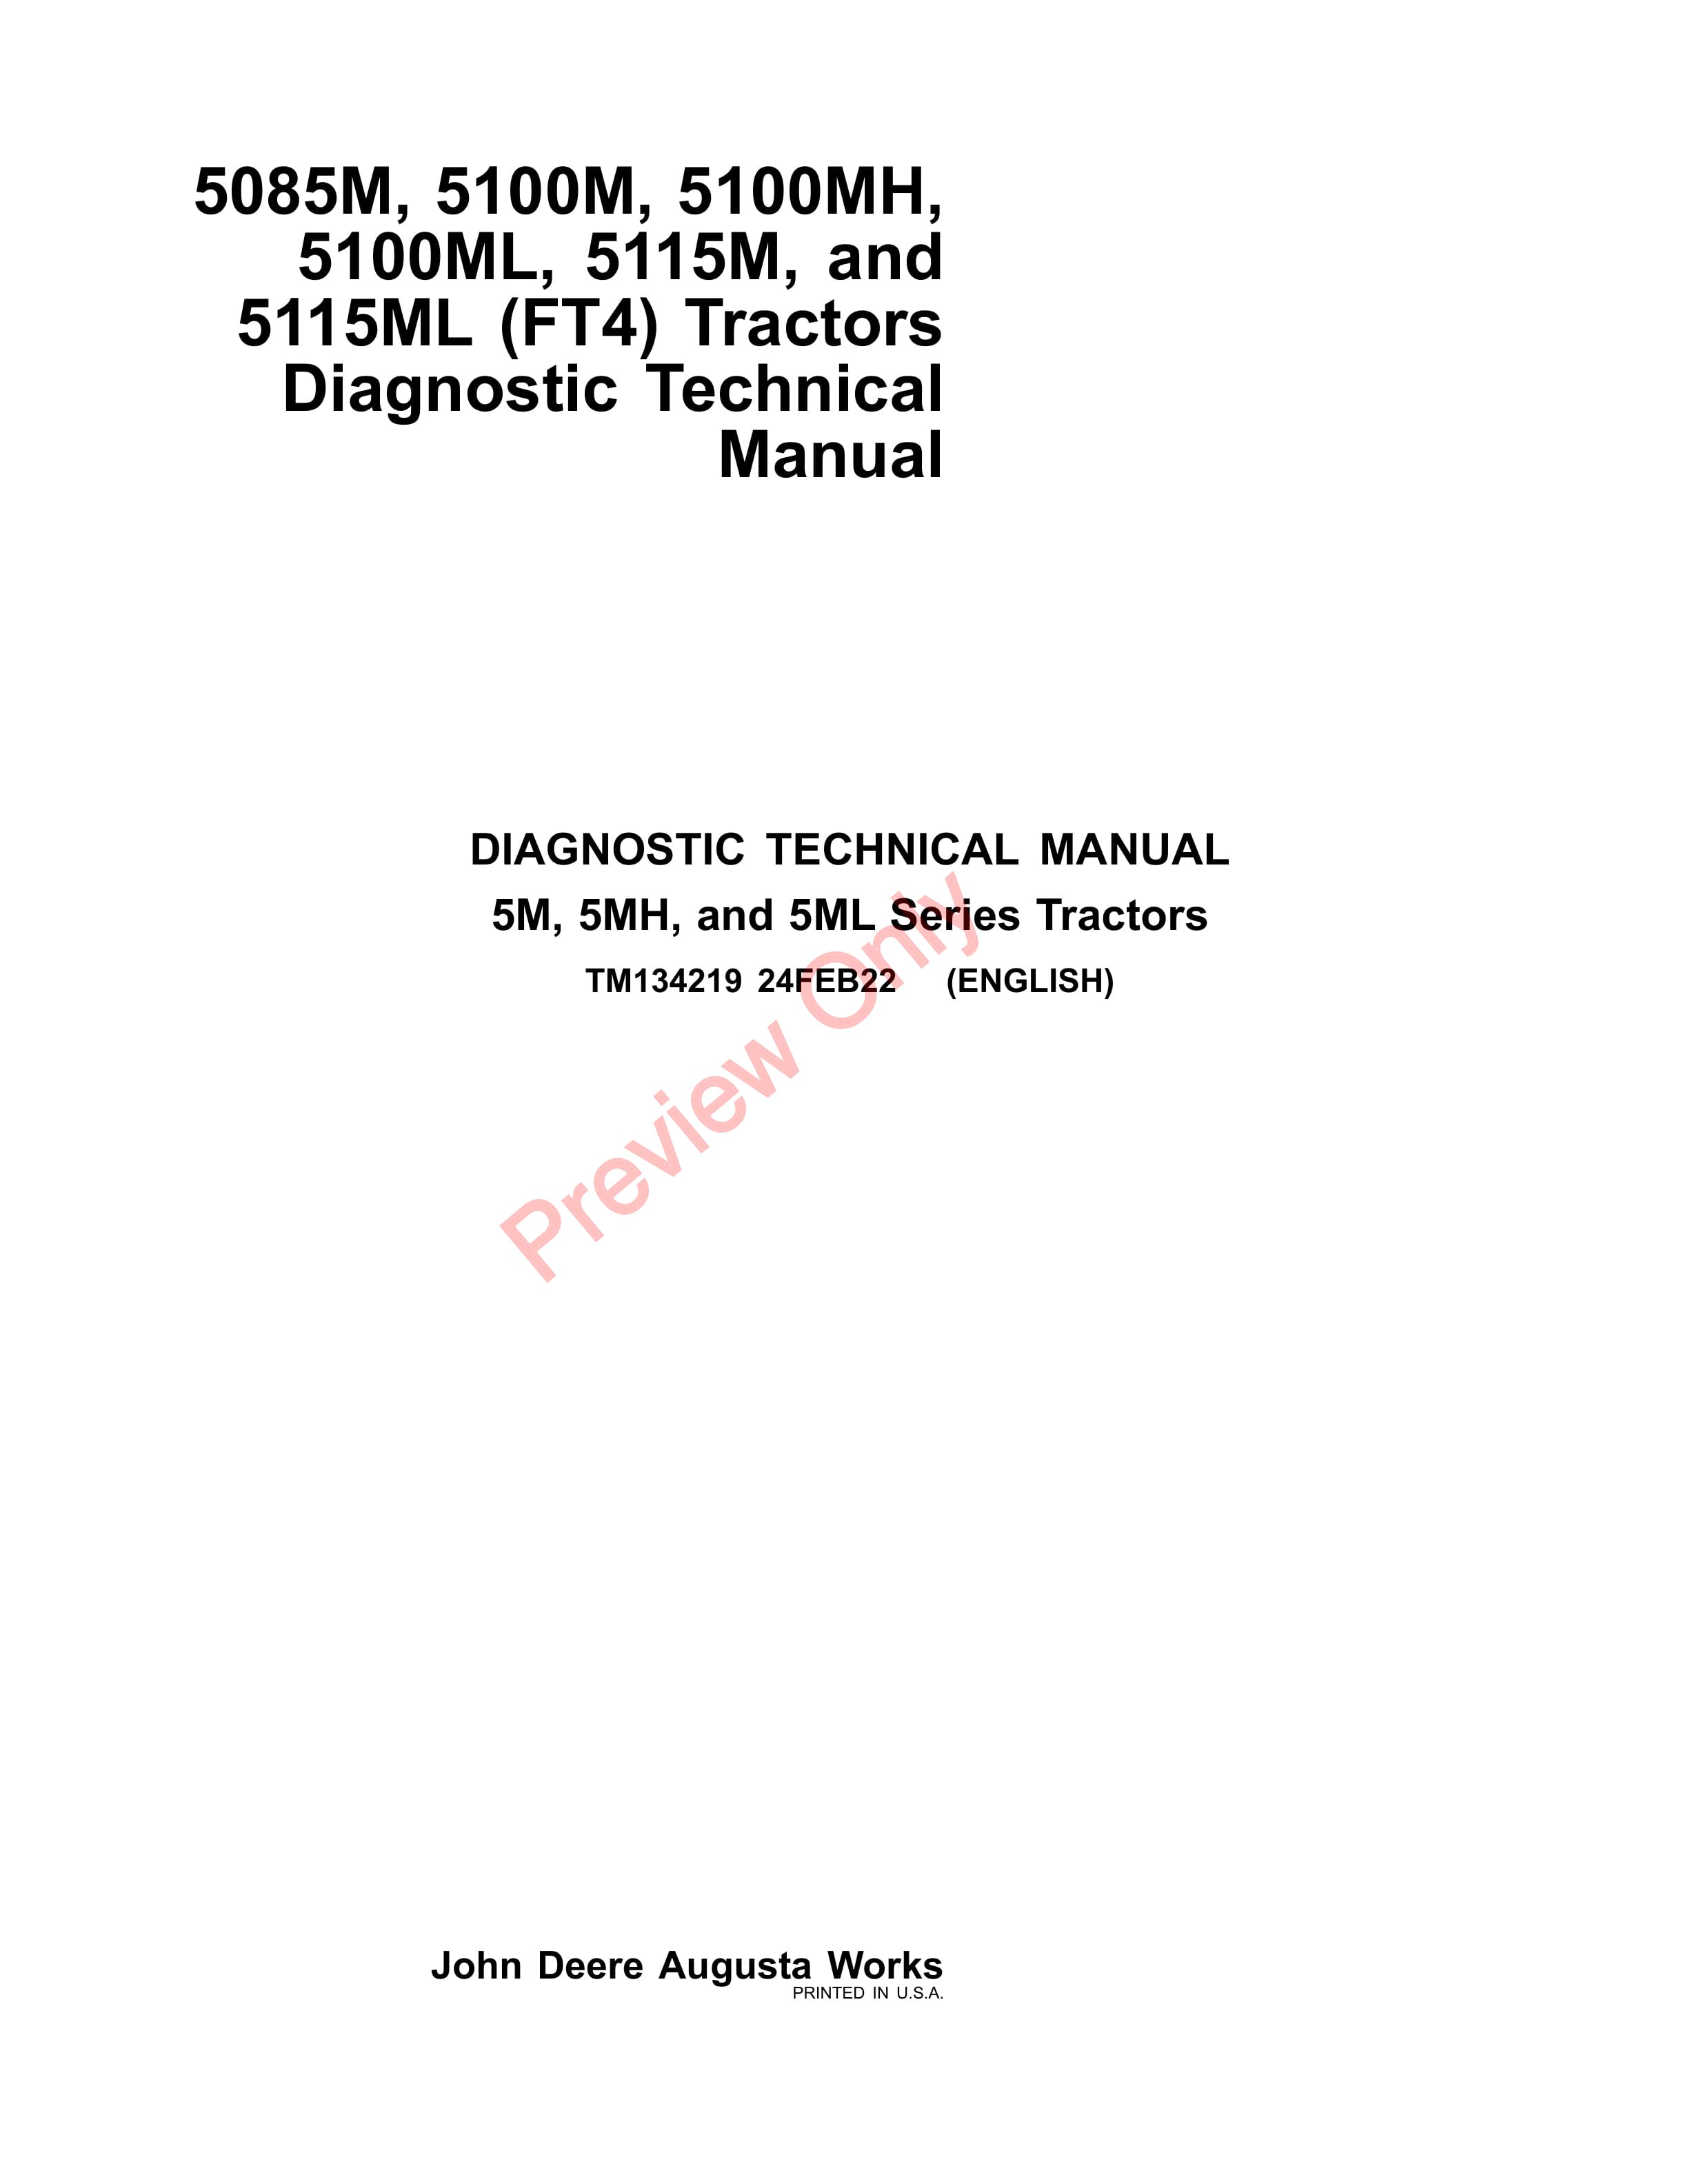 John Deere 5085M 5100M 5100MH 5100ML 5115M and 5115MLFT4 Tractors Diagnostic Technical Manual TM134219 24FEB22 1